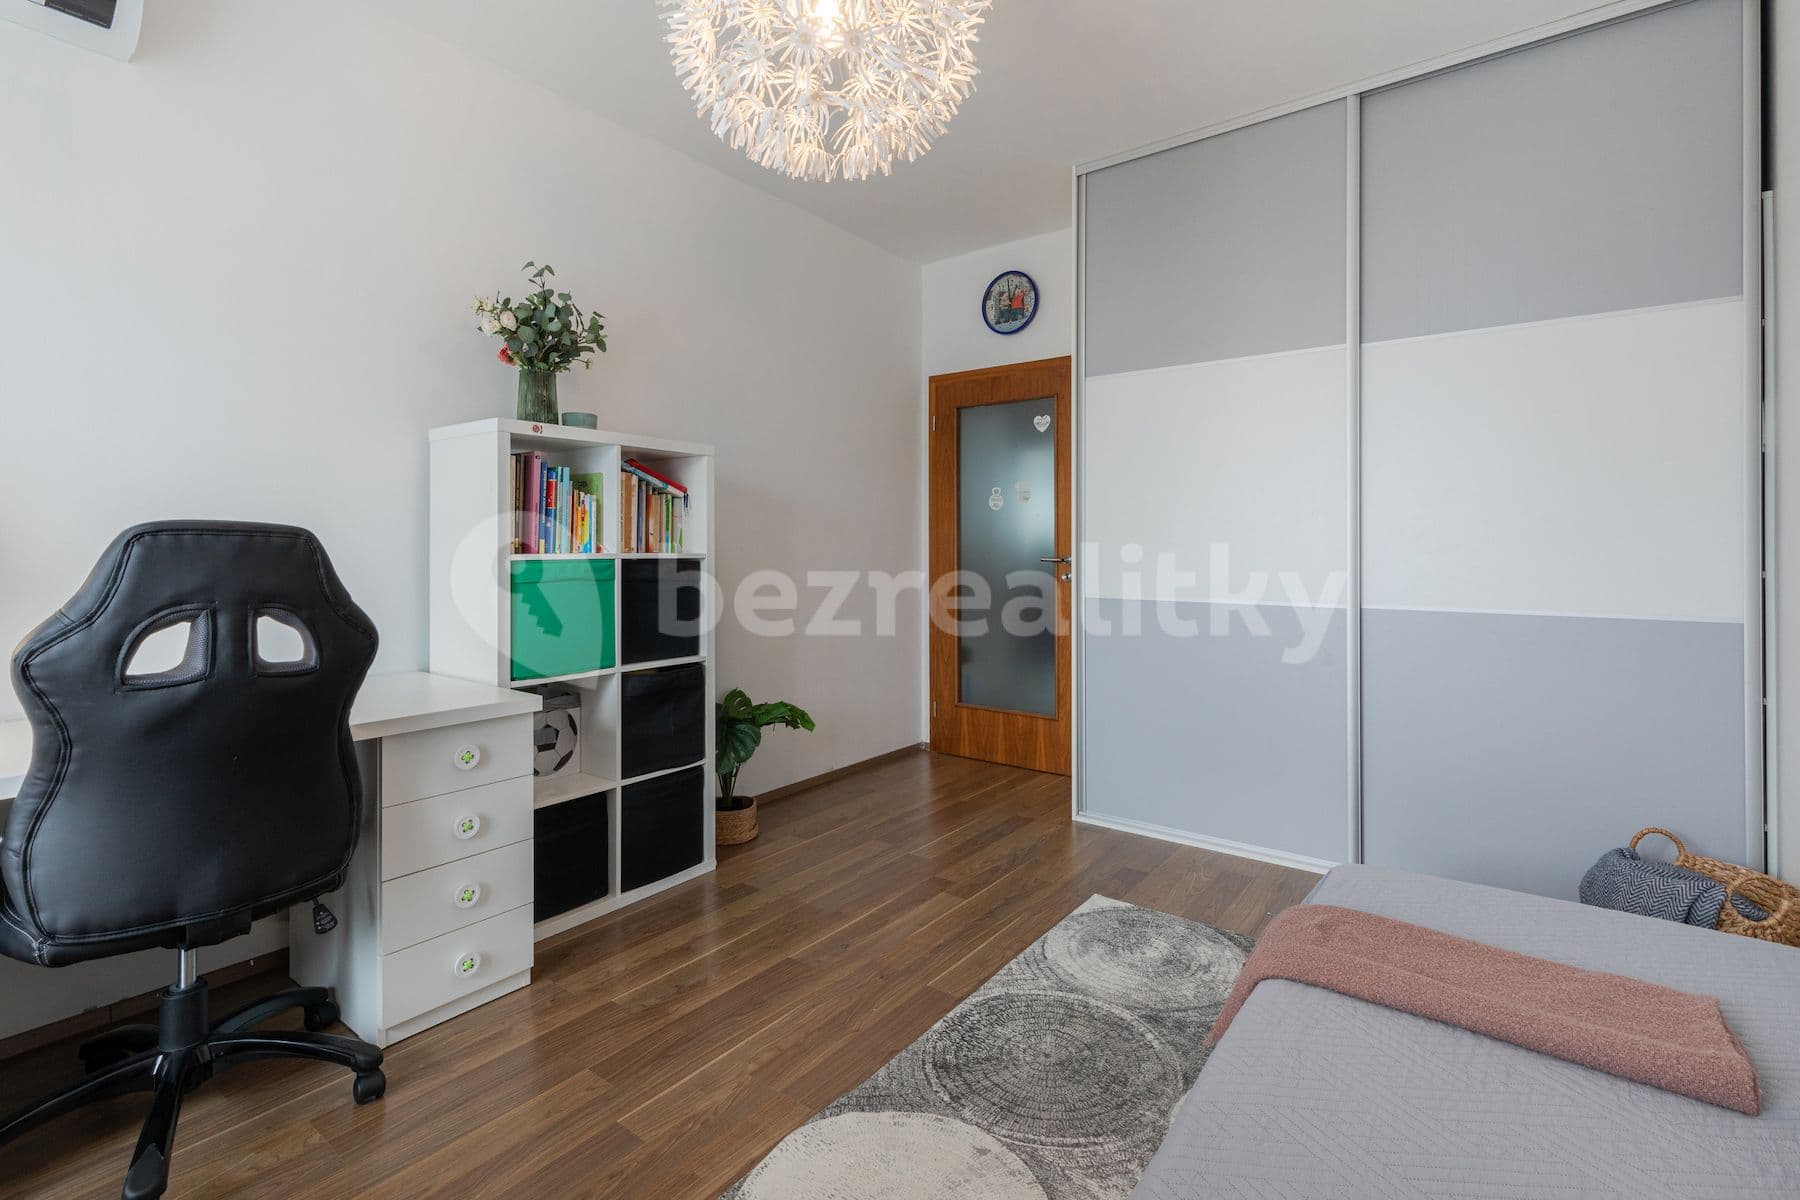 Predaj bytu 3-izbový 84 m², Miroslava Hajna, Praha, Praha